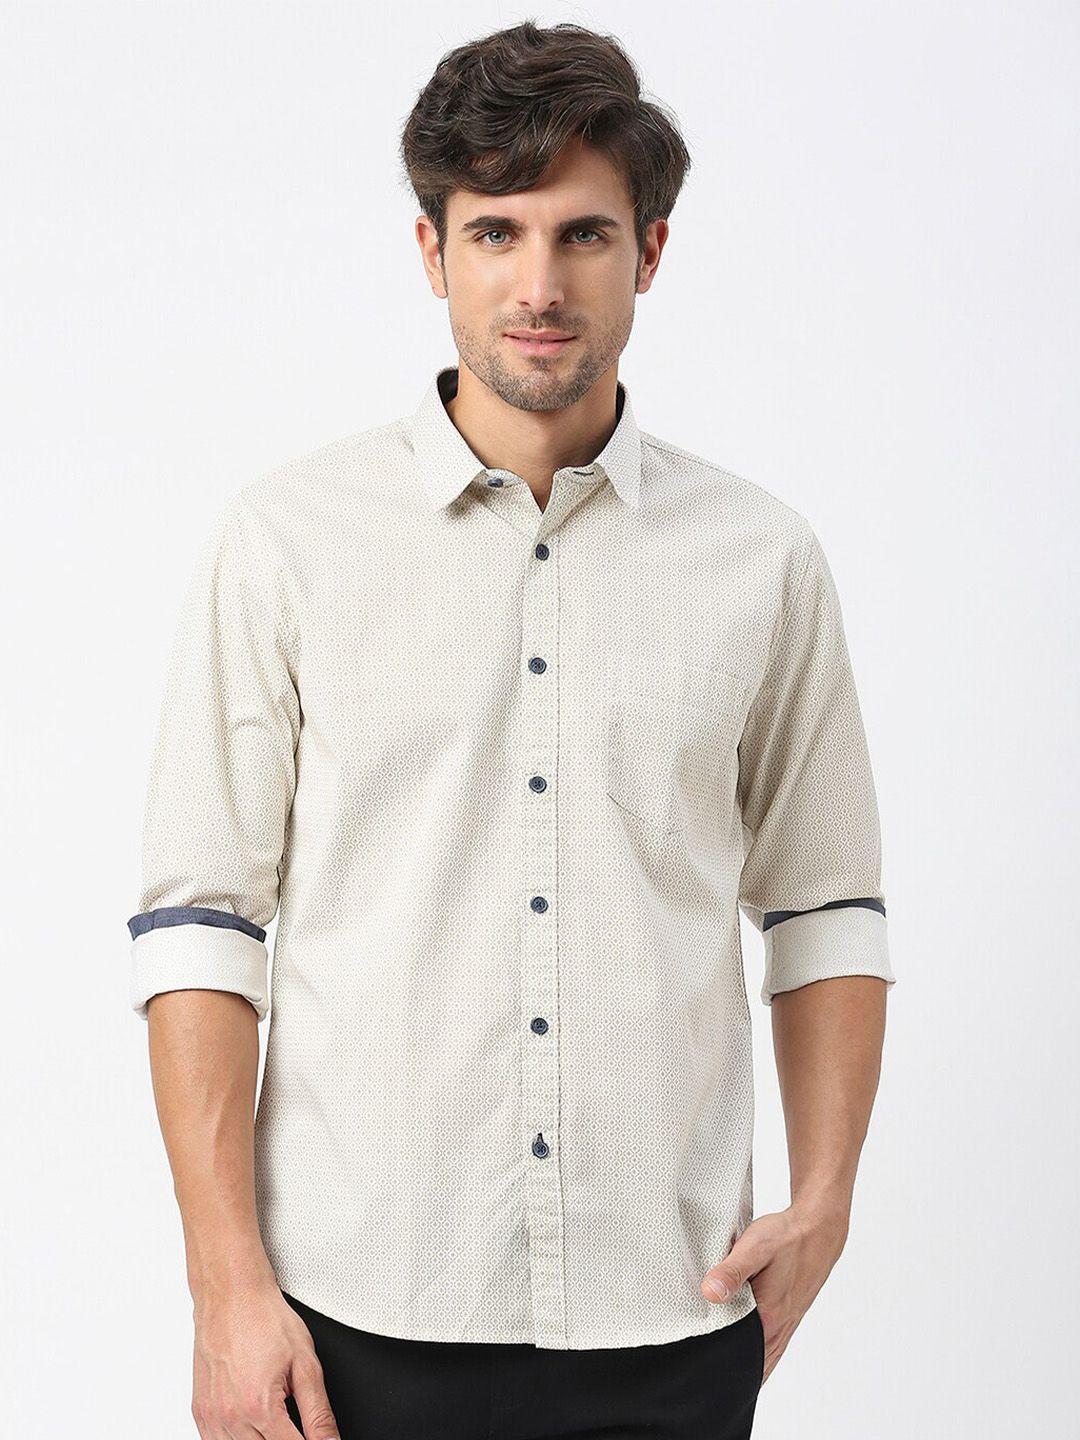 dragon hill conversational printed slim fit cotton casual shirt